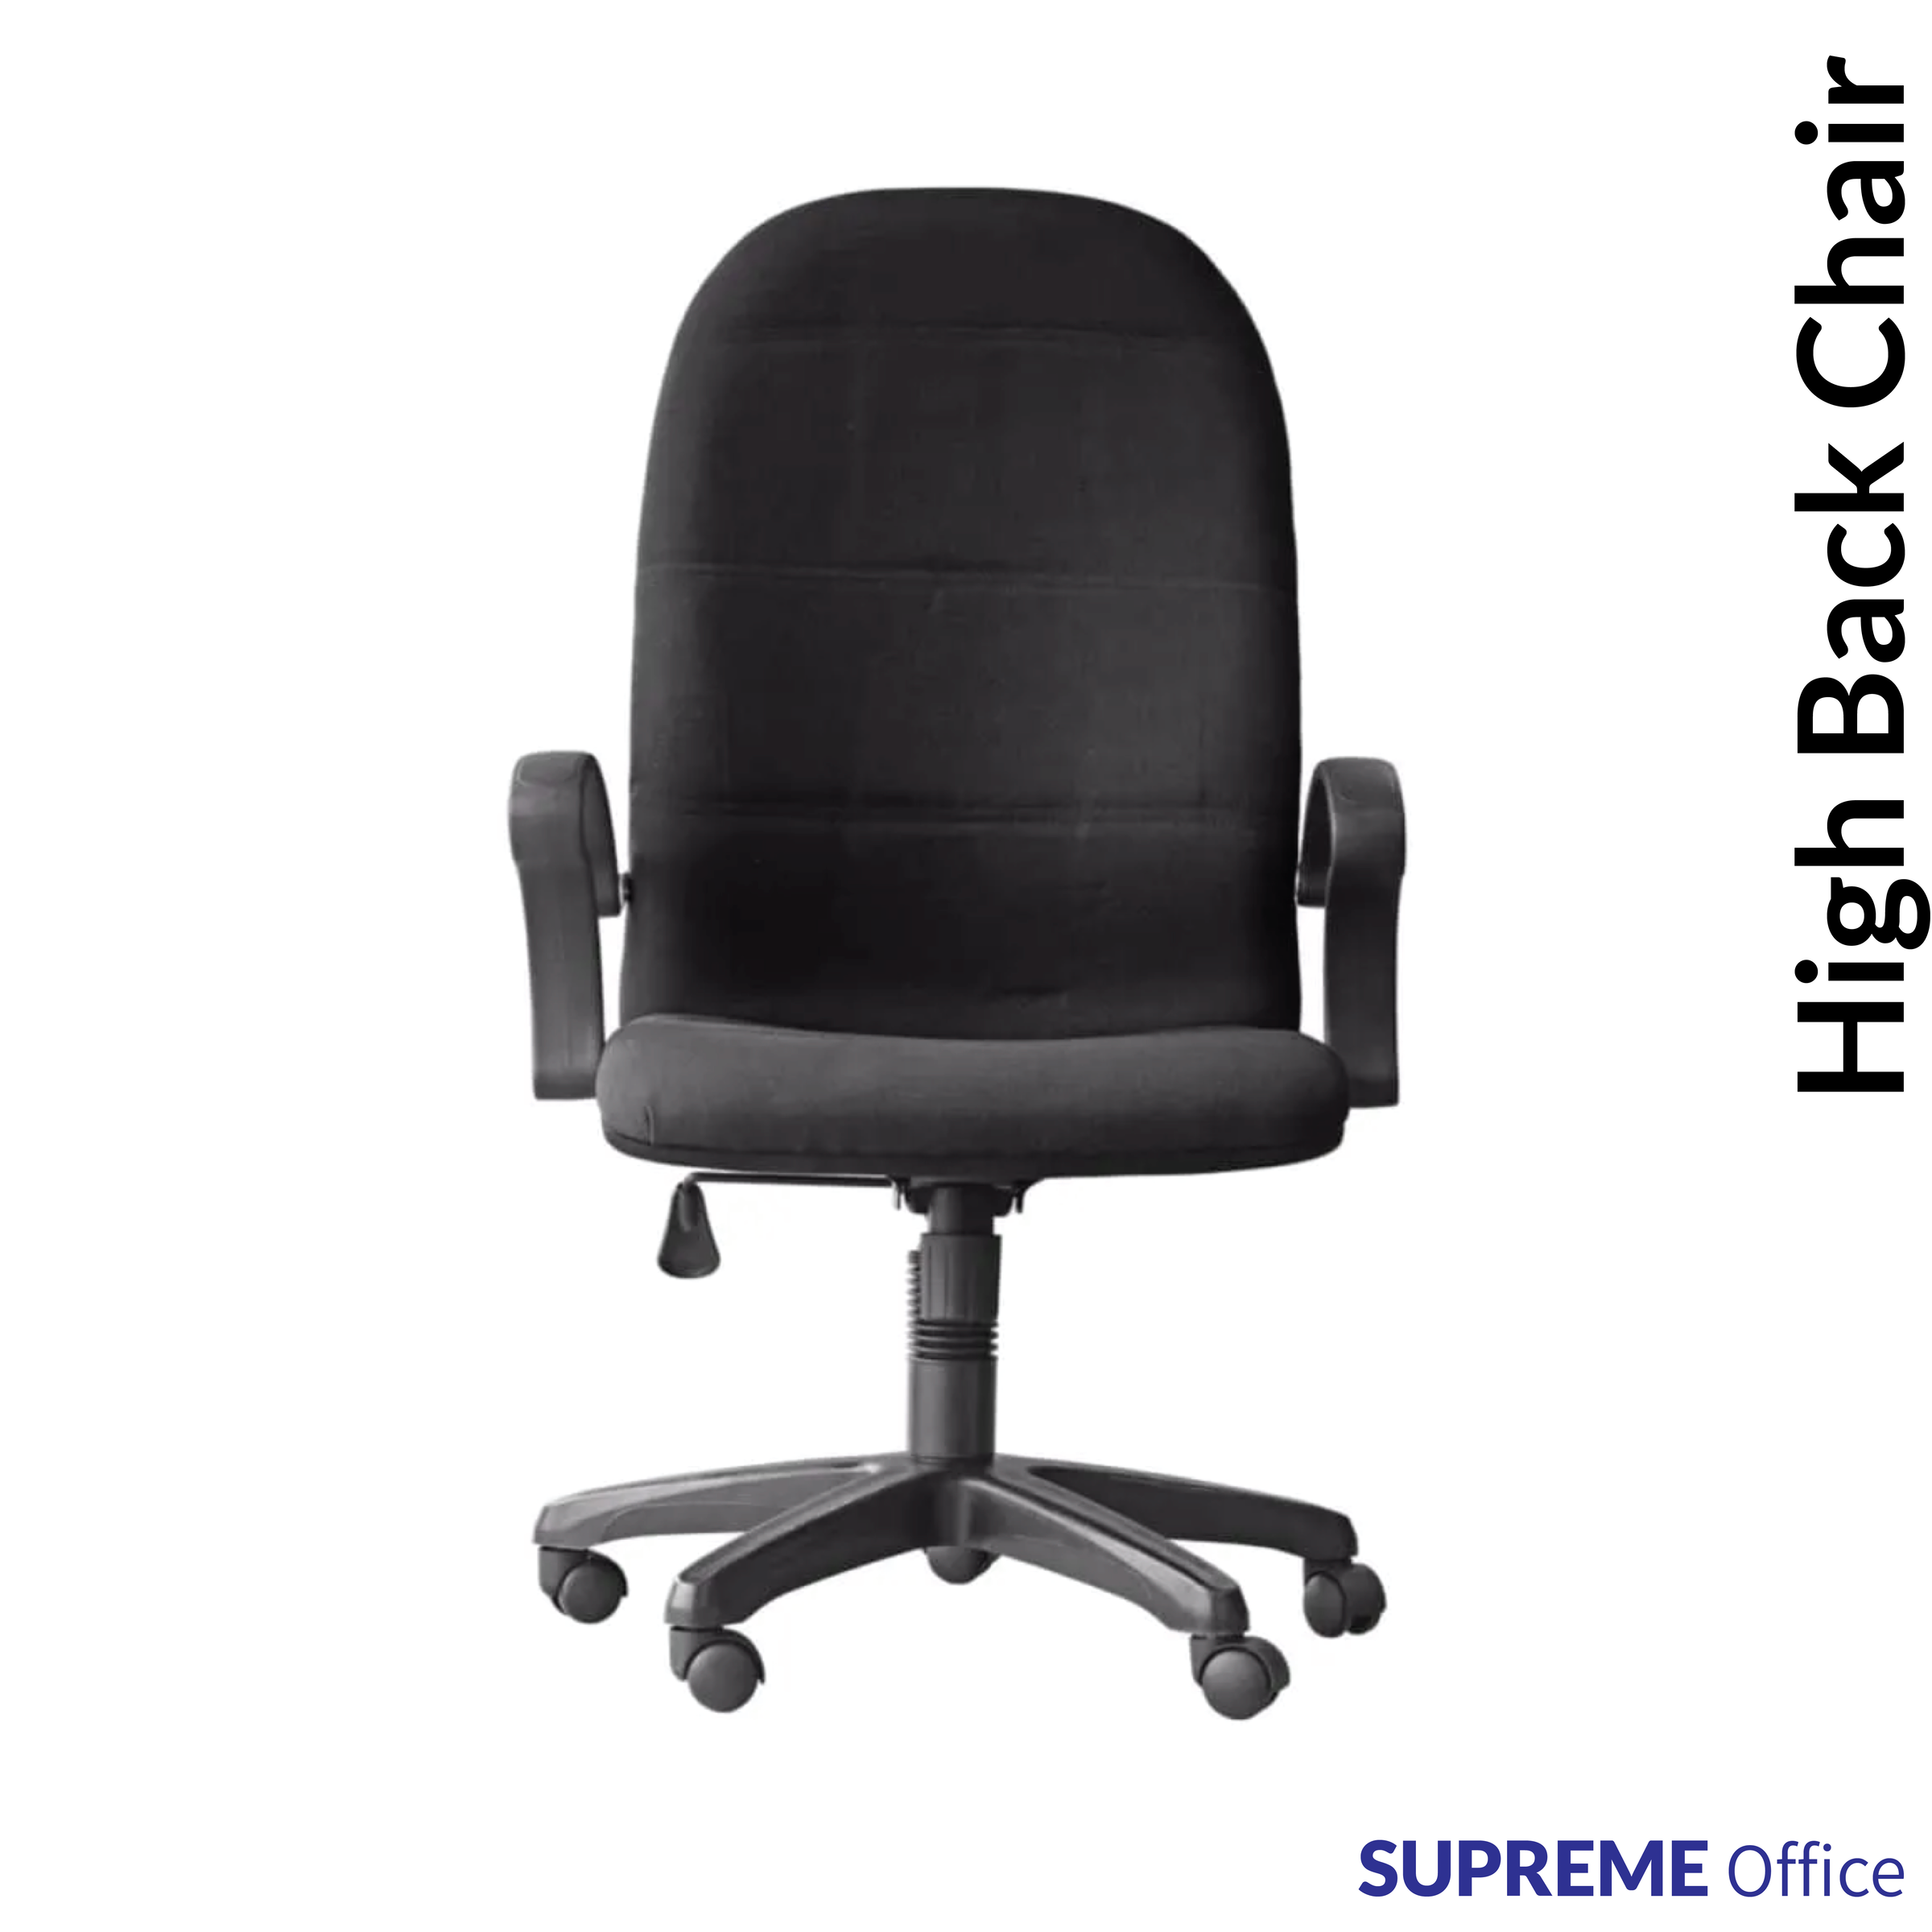 3v office chair-01